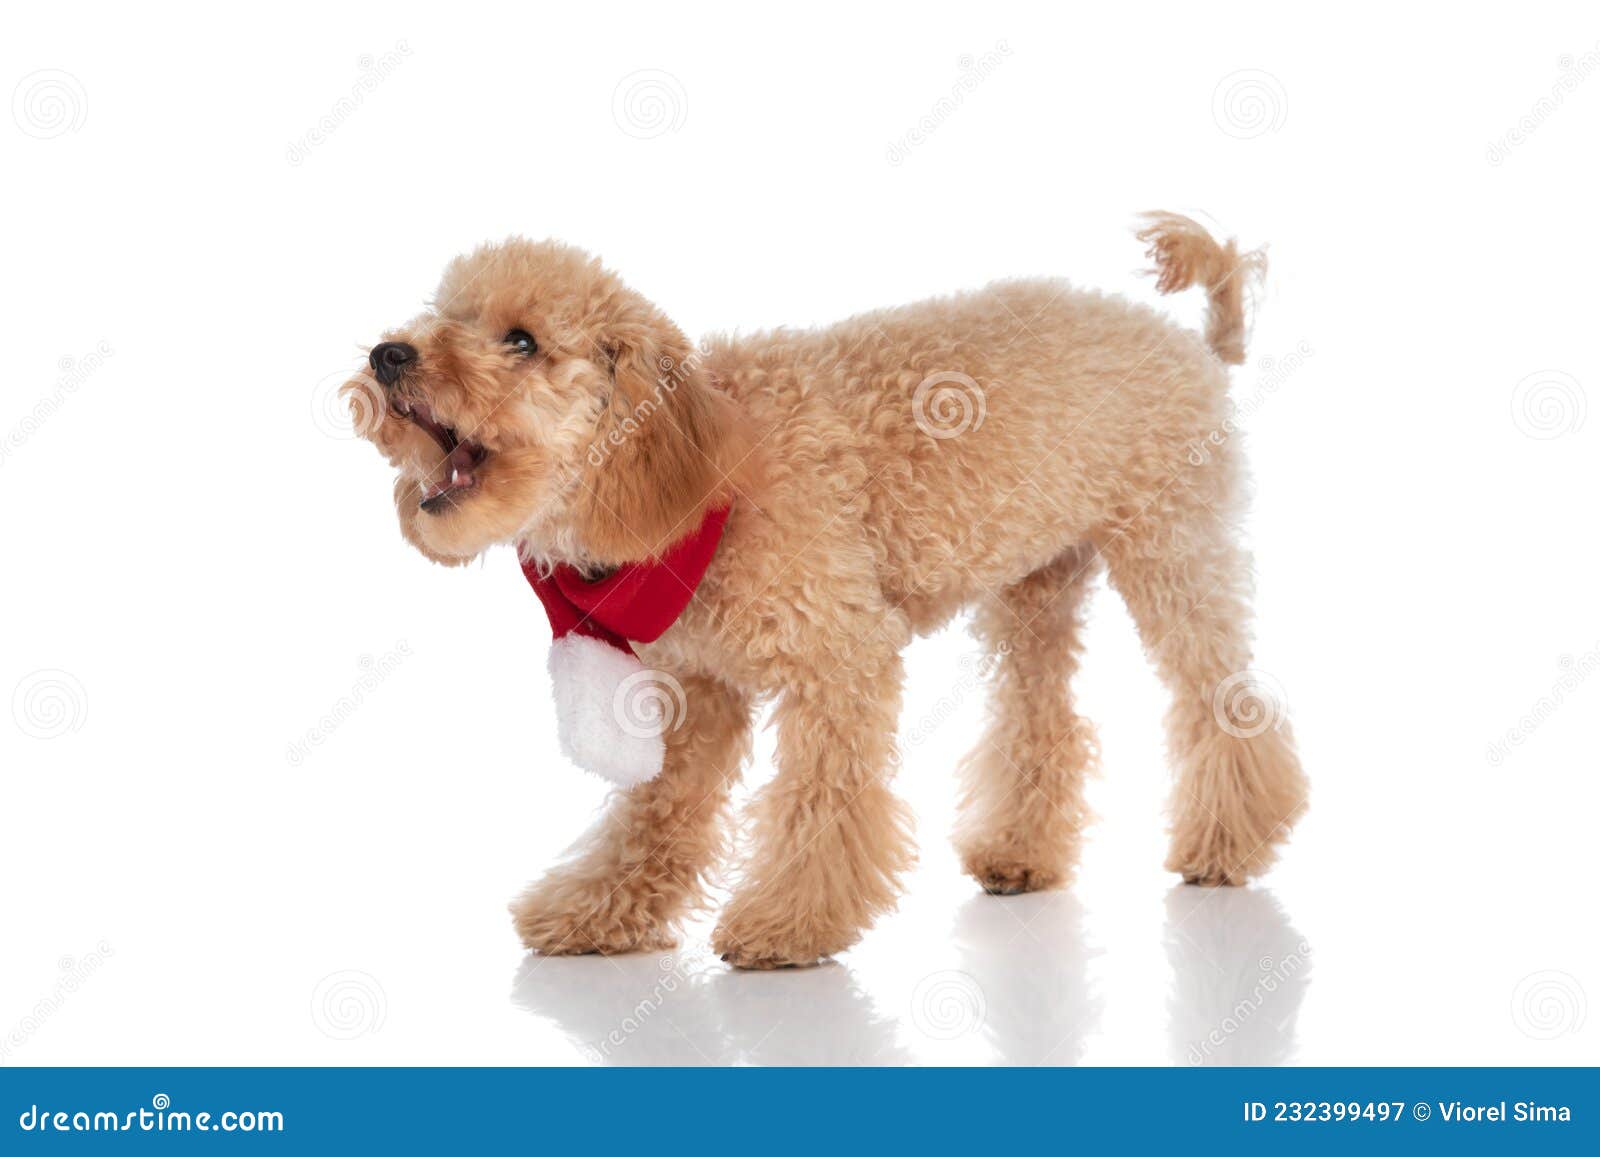 caniche dog barking at someone and wearing a red bandana